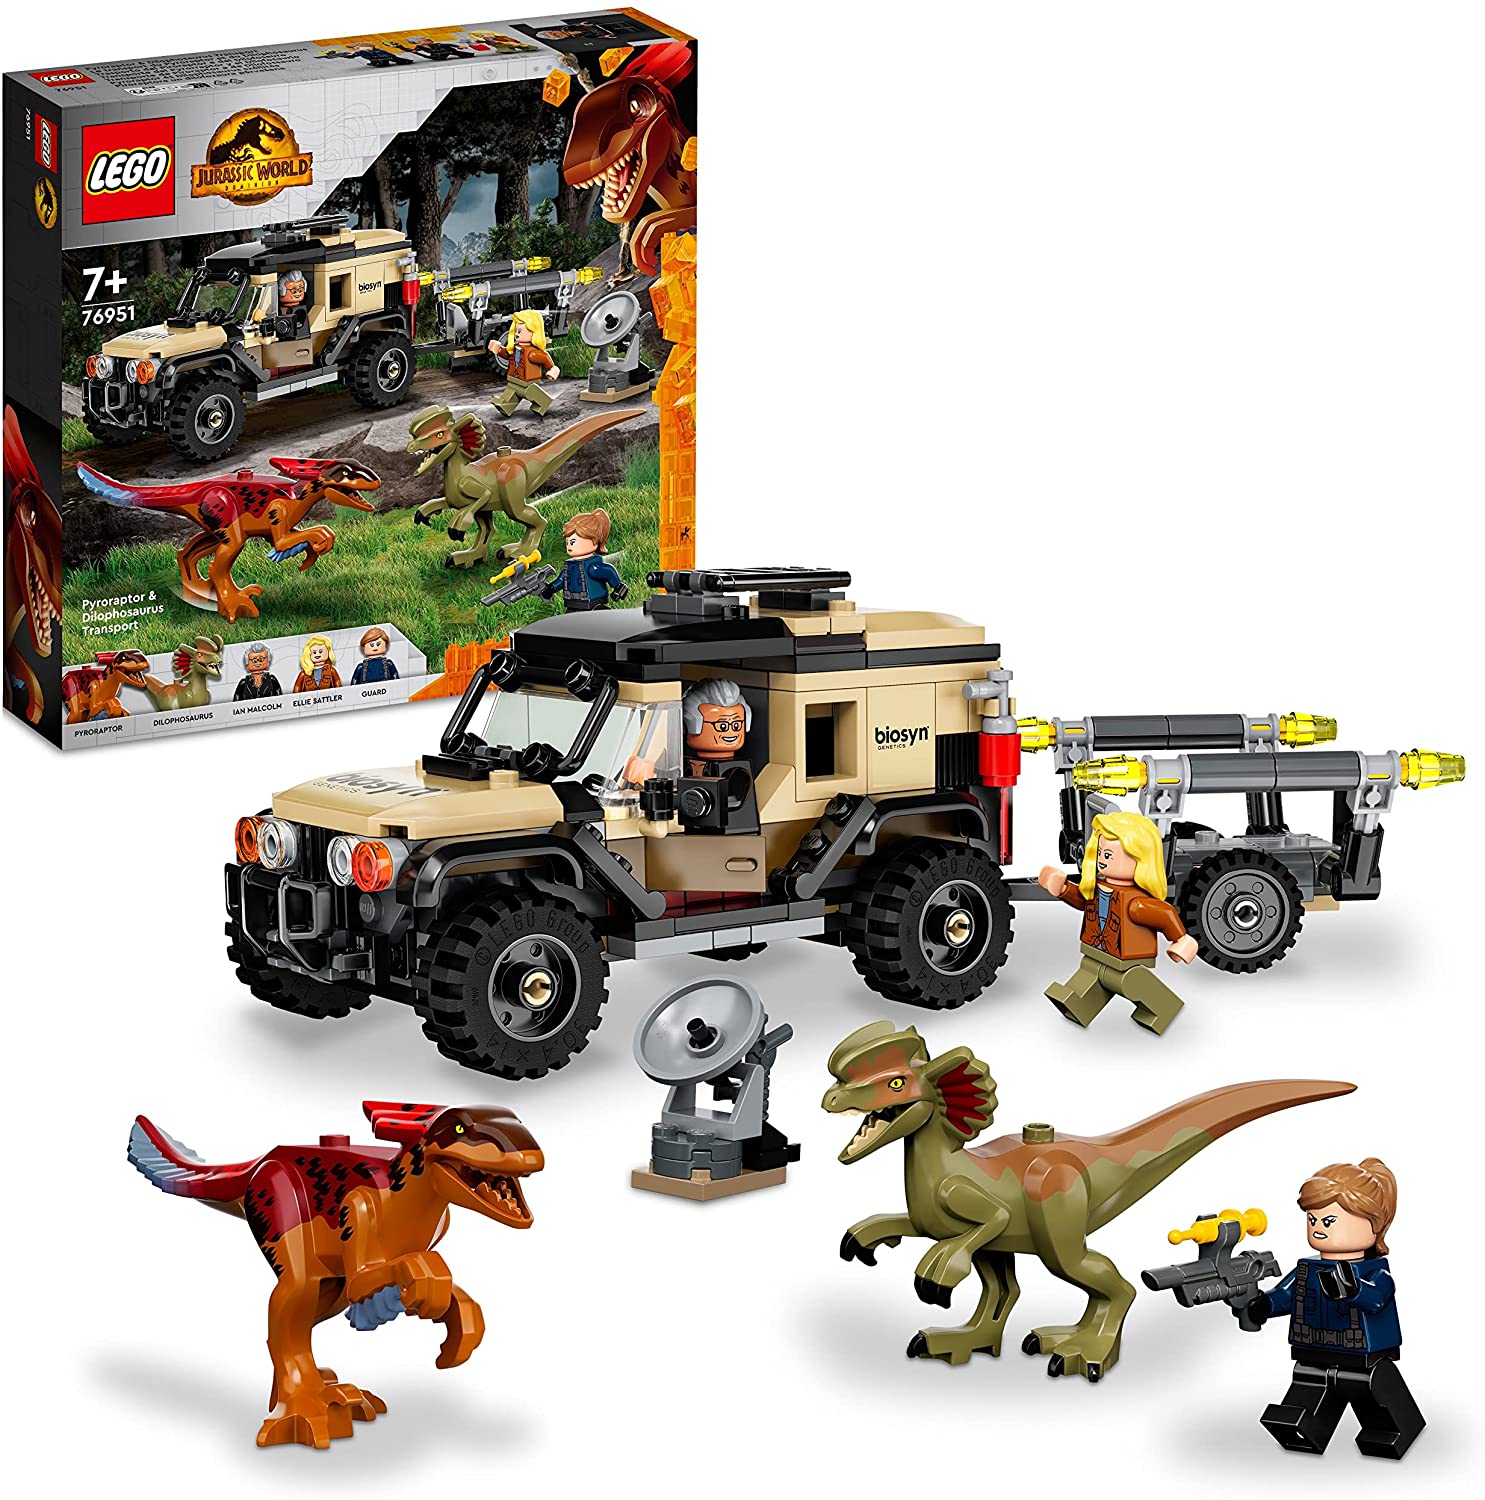 LEGO 76951 Jurassic World Pyroraptor & Dilophosaurus Transport Toy Car Off-Roader with Dinosaur Figure from 7 Years